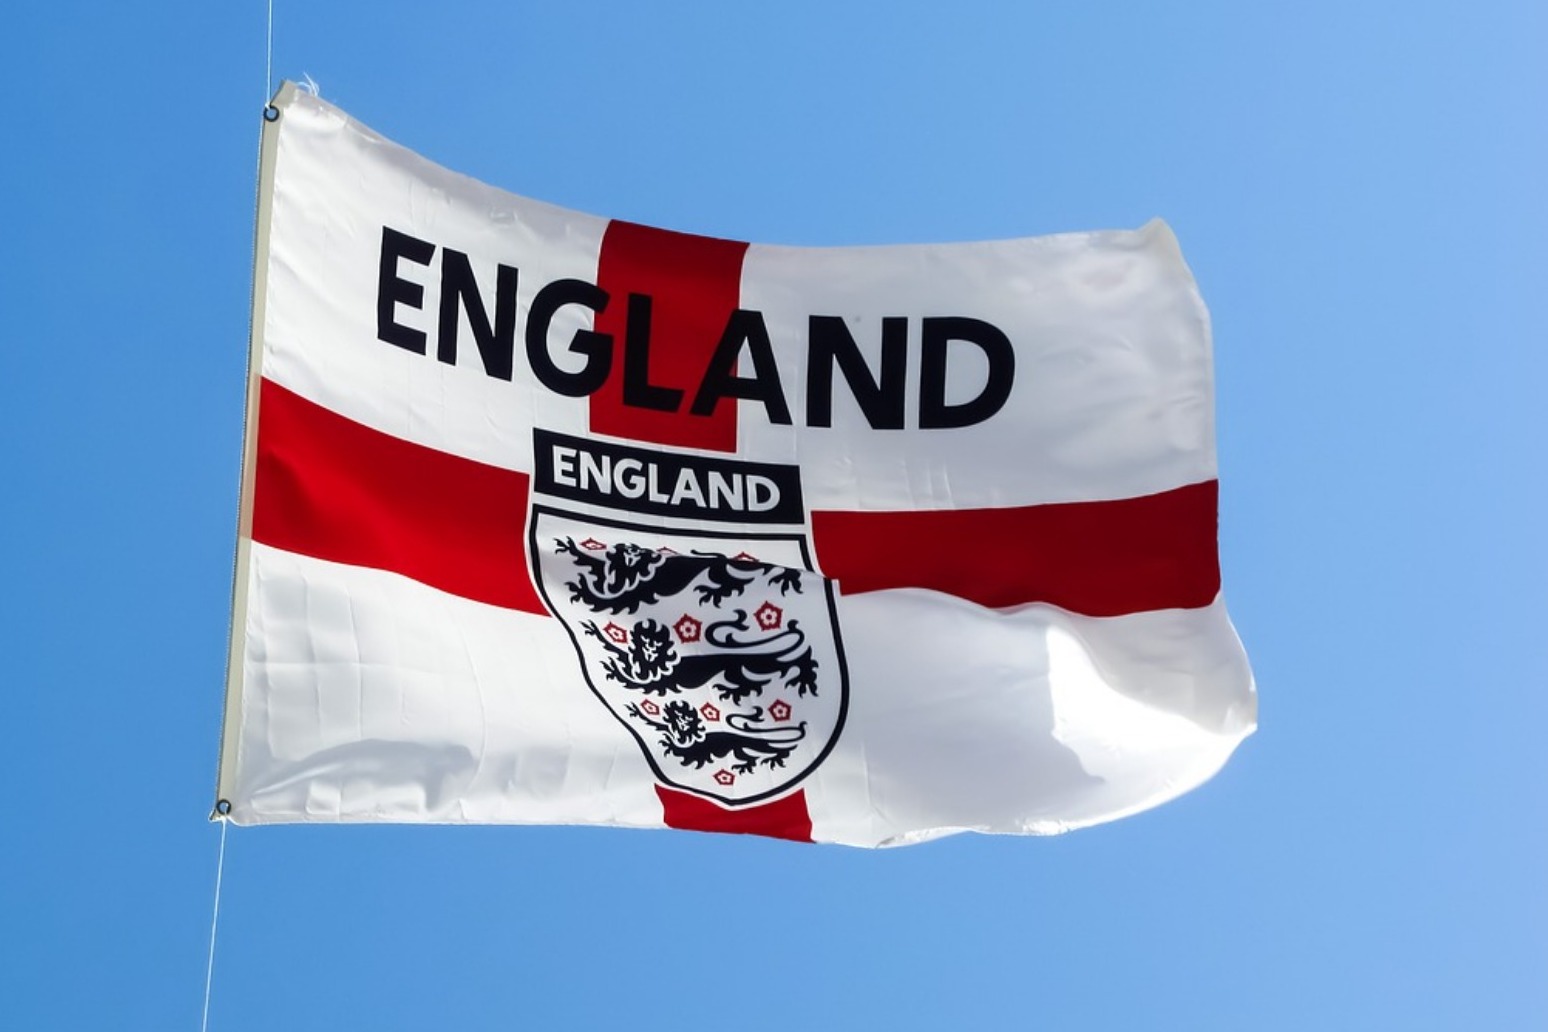 Kane bags three as England thrash Panama at the World Cup 